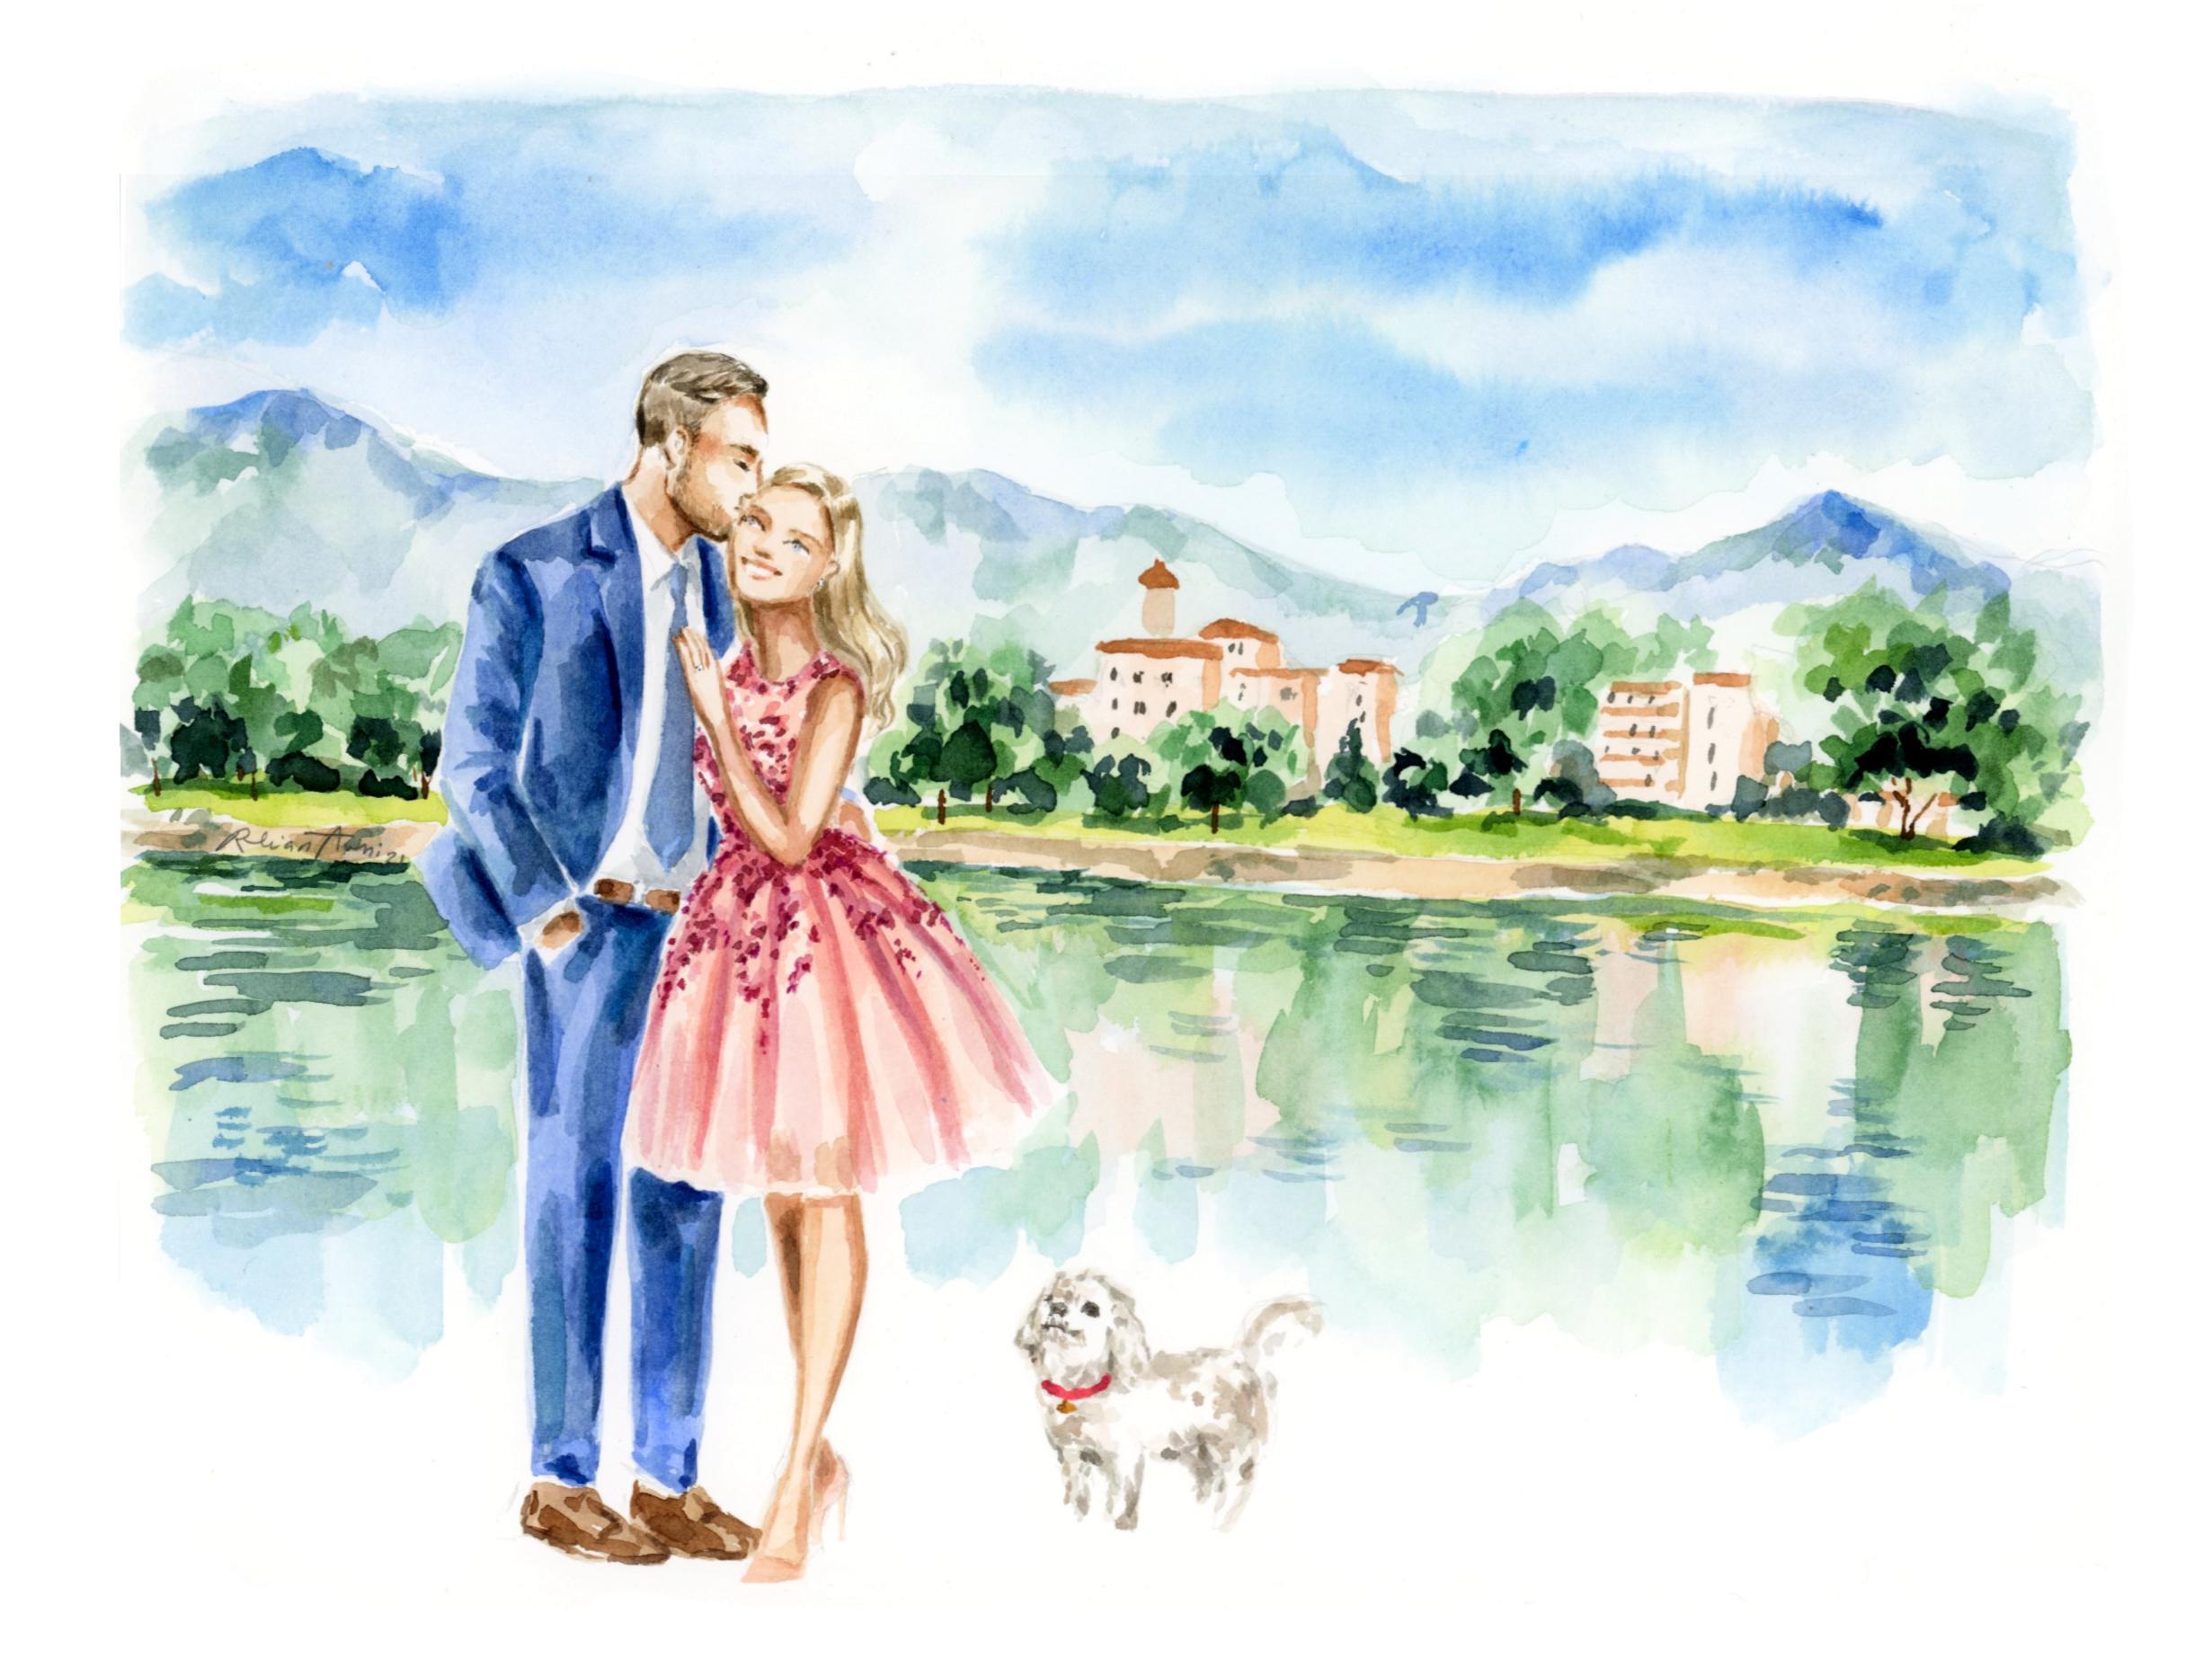 The Wedding Website of Lauren Miller and Nicholas Mahrou